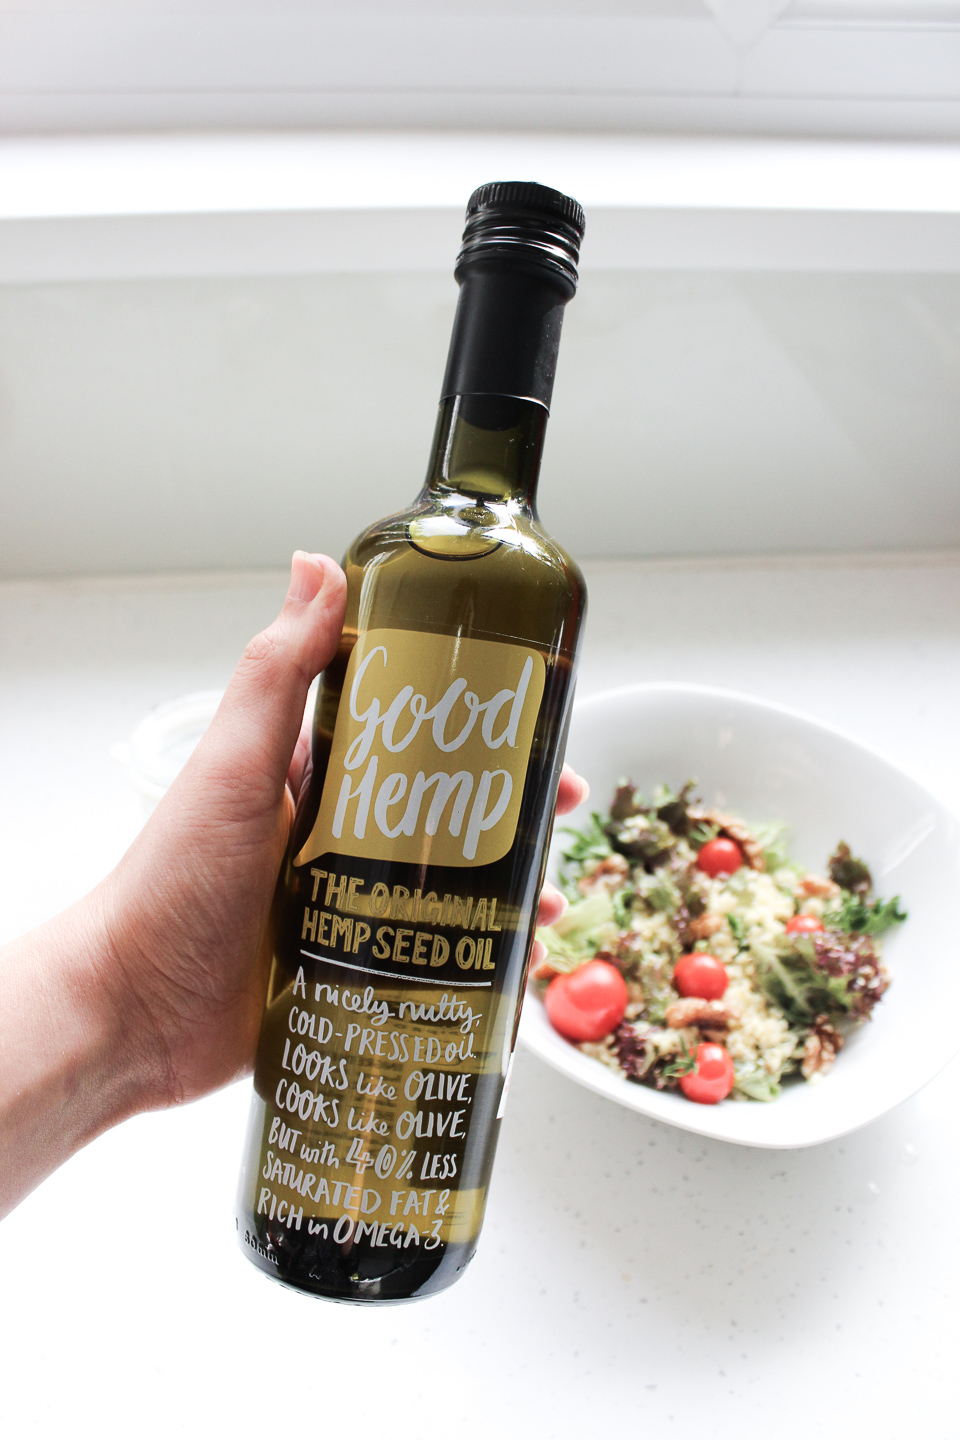 Good Hemp's hemp oil